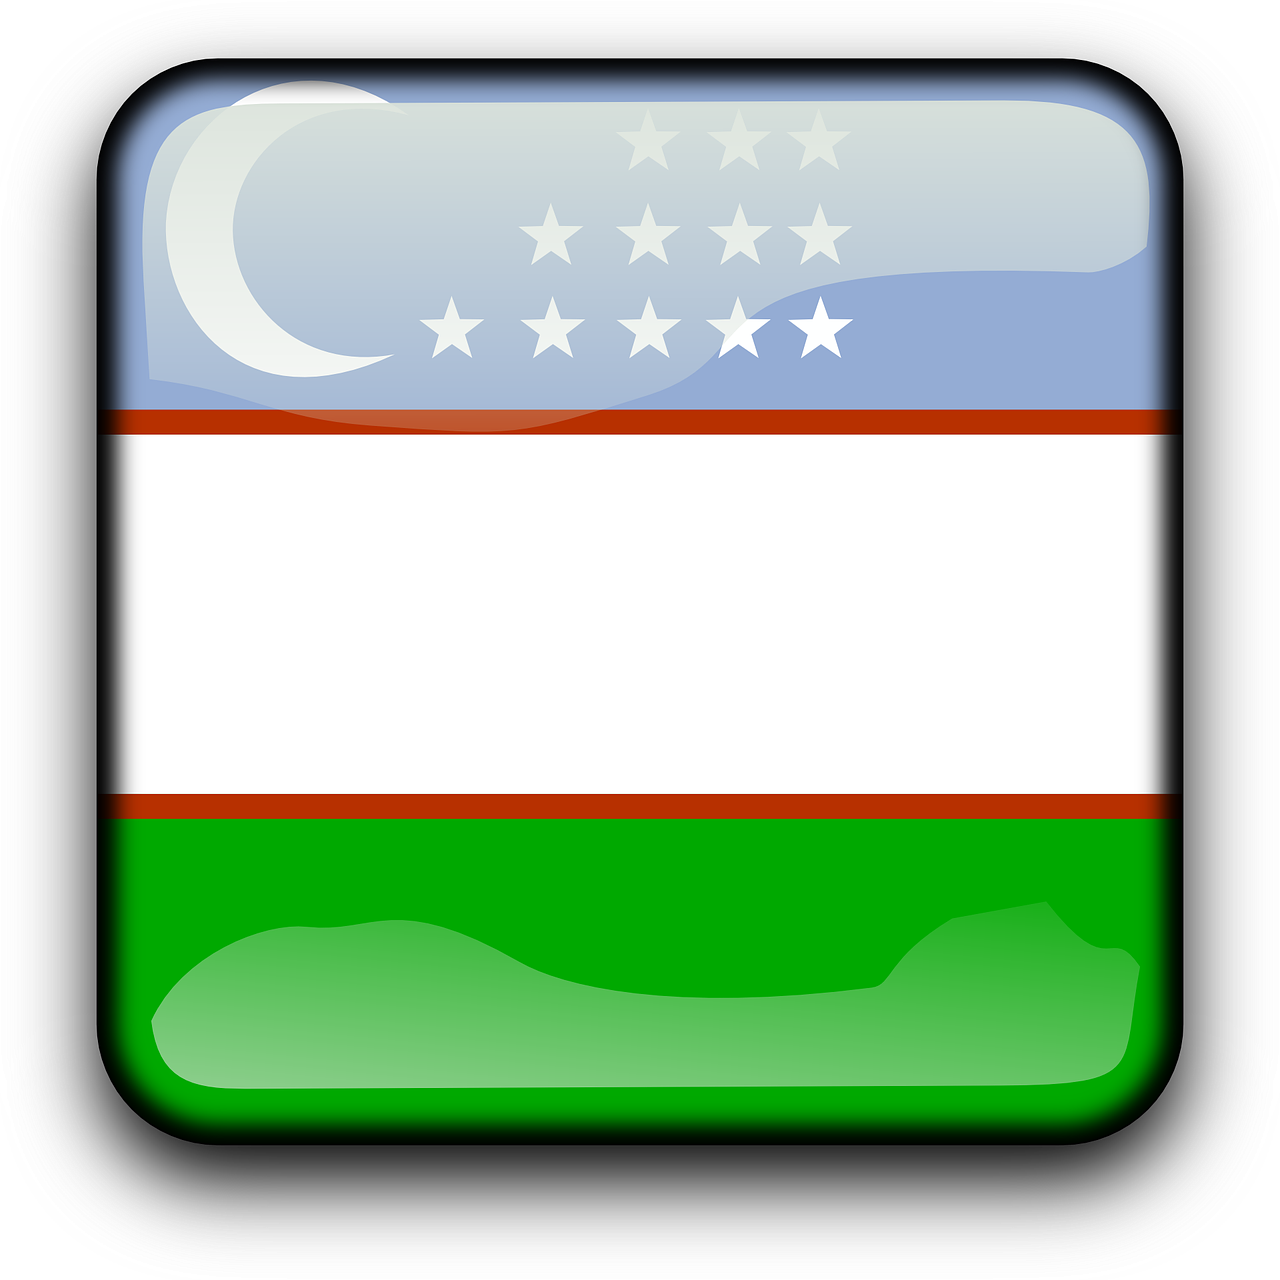 Uzbekistan Flag PNG Photo Image